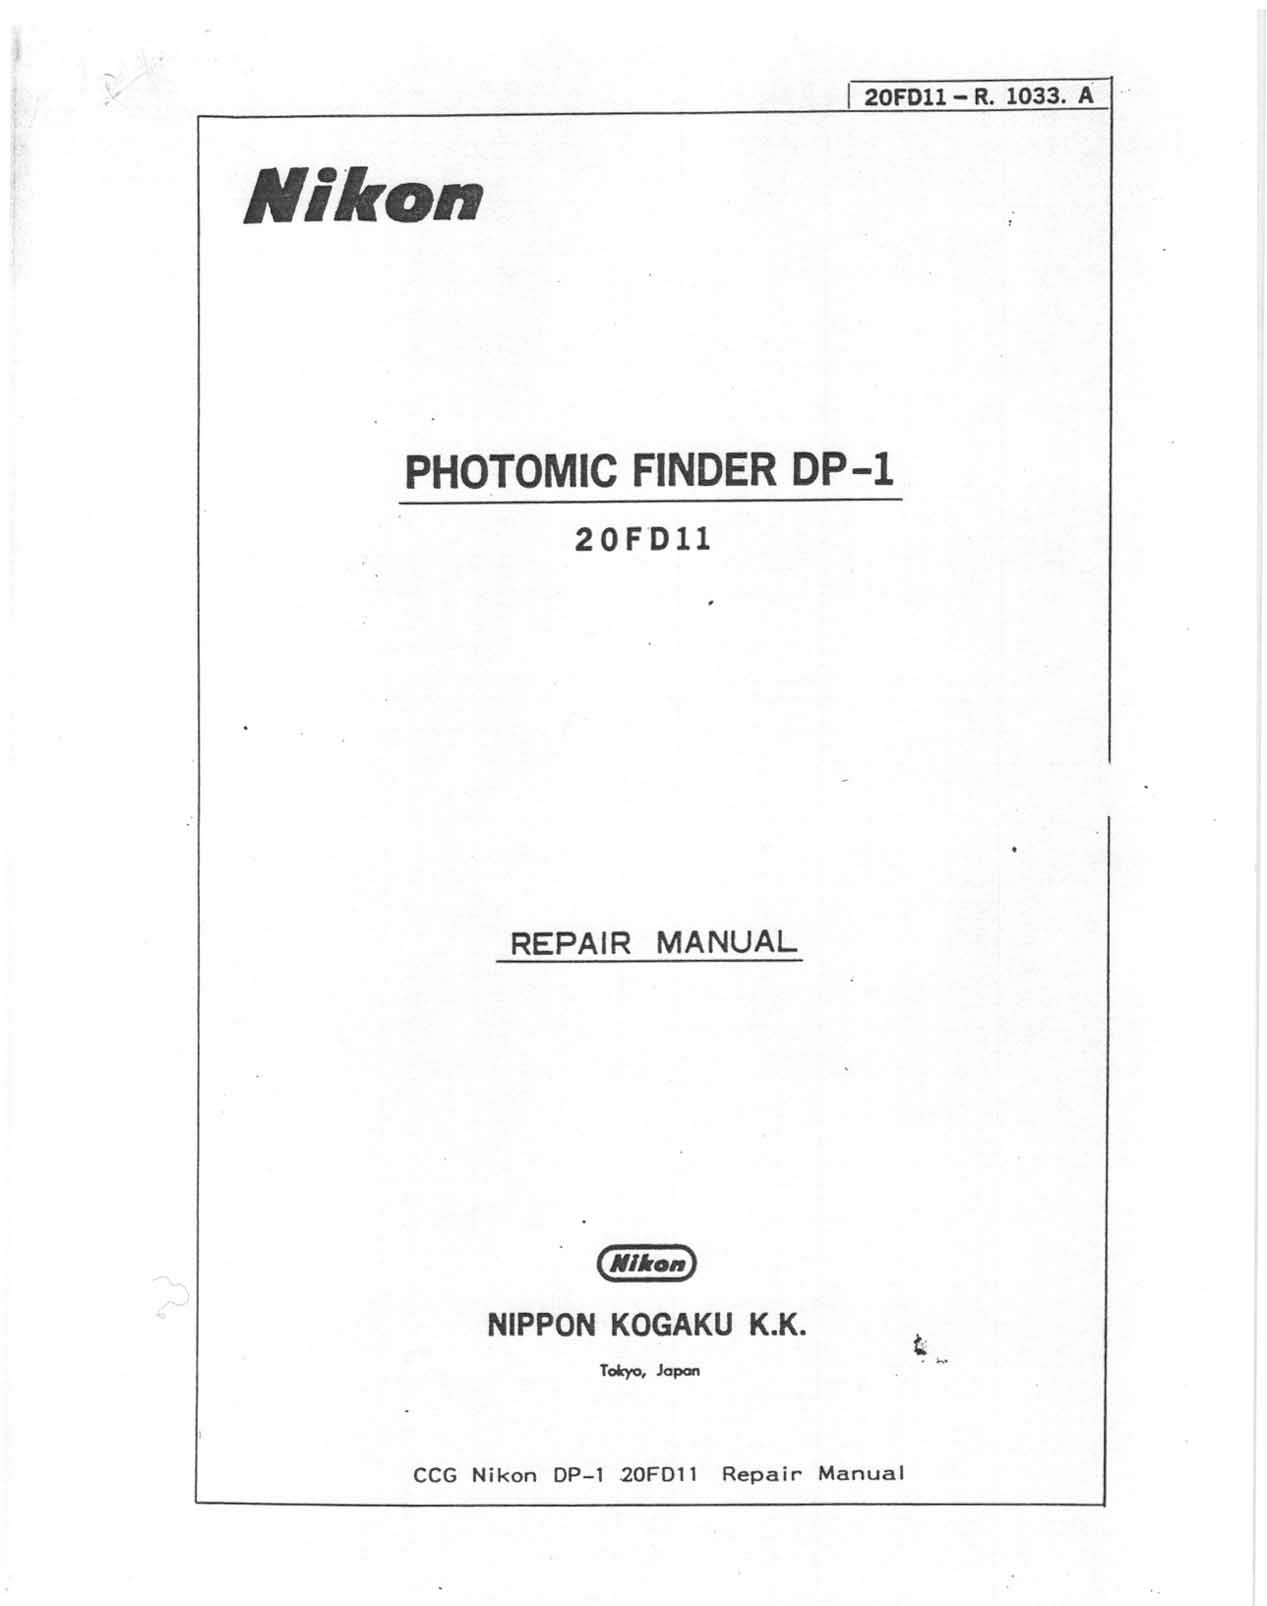 Nikon Photomic Finder DP-1 Photomic Finder DP-1